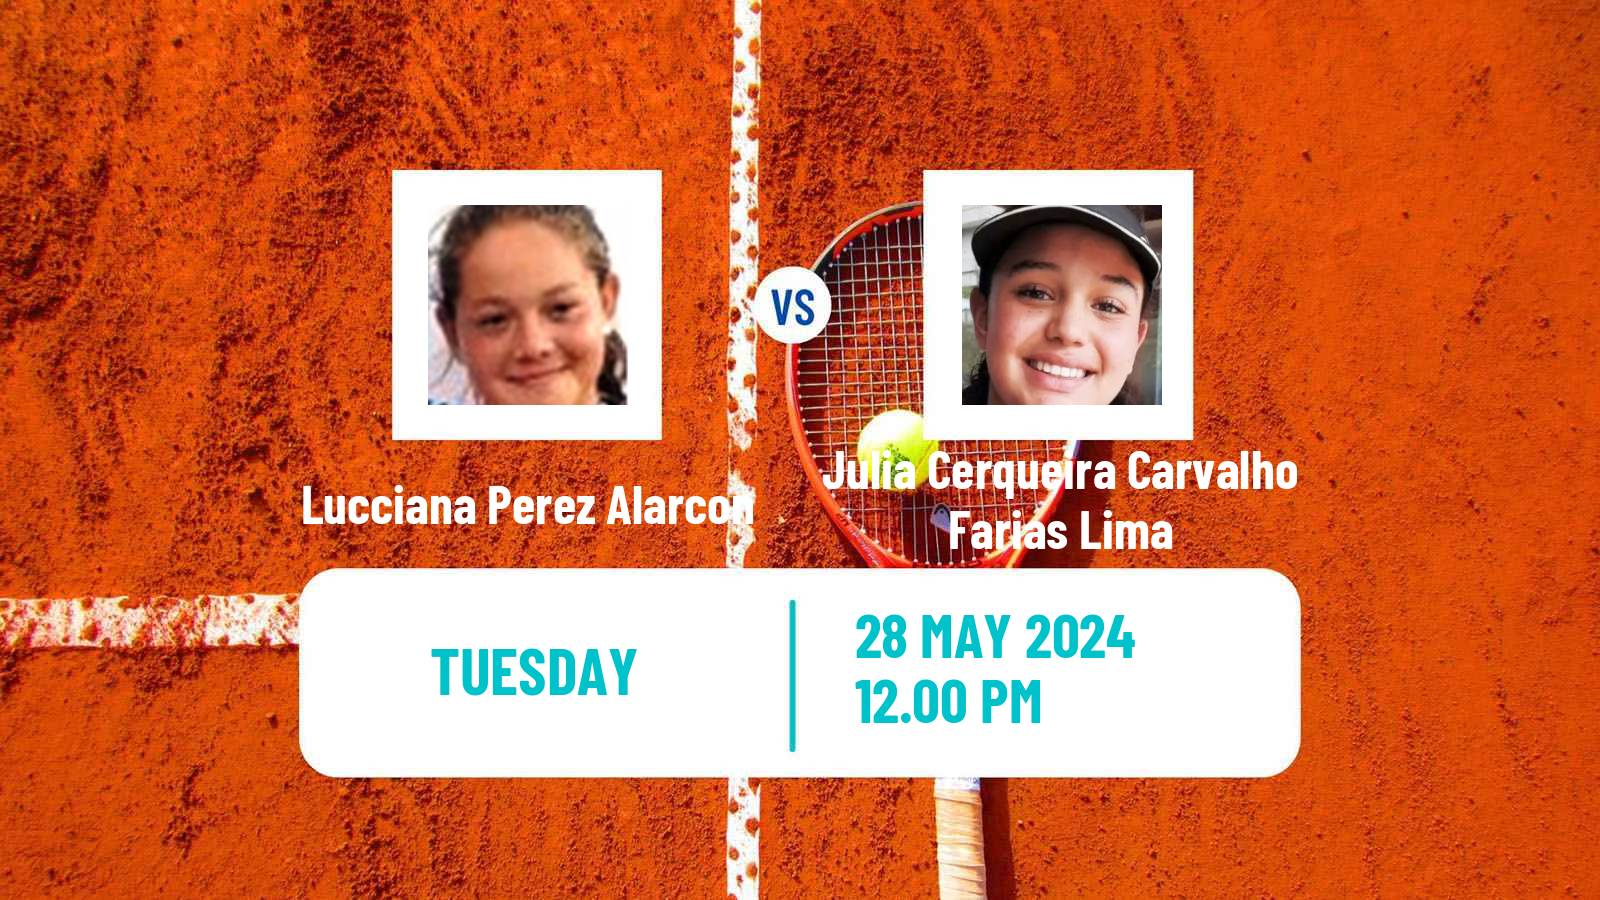 Tennis ITF W15 Rio Claro Women Lucciana Perez Alarcon - Julia Cerqueira Carvalho Farias Lima